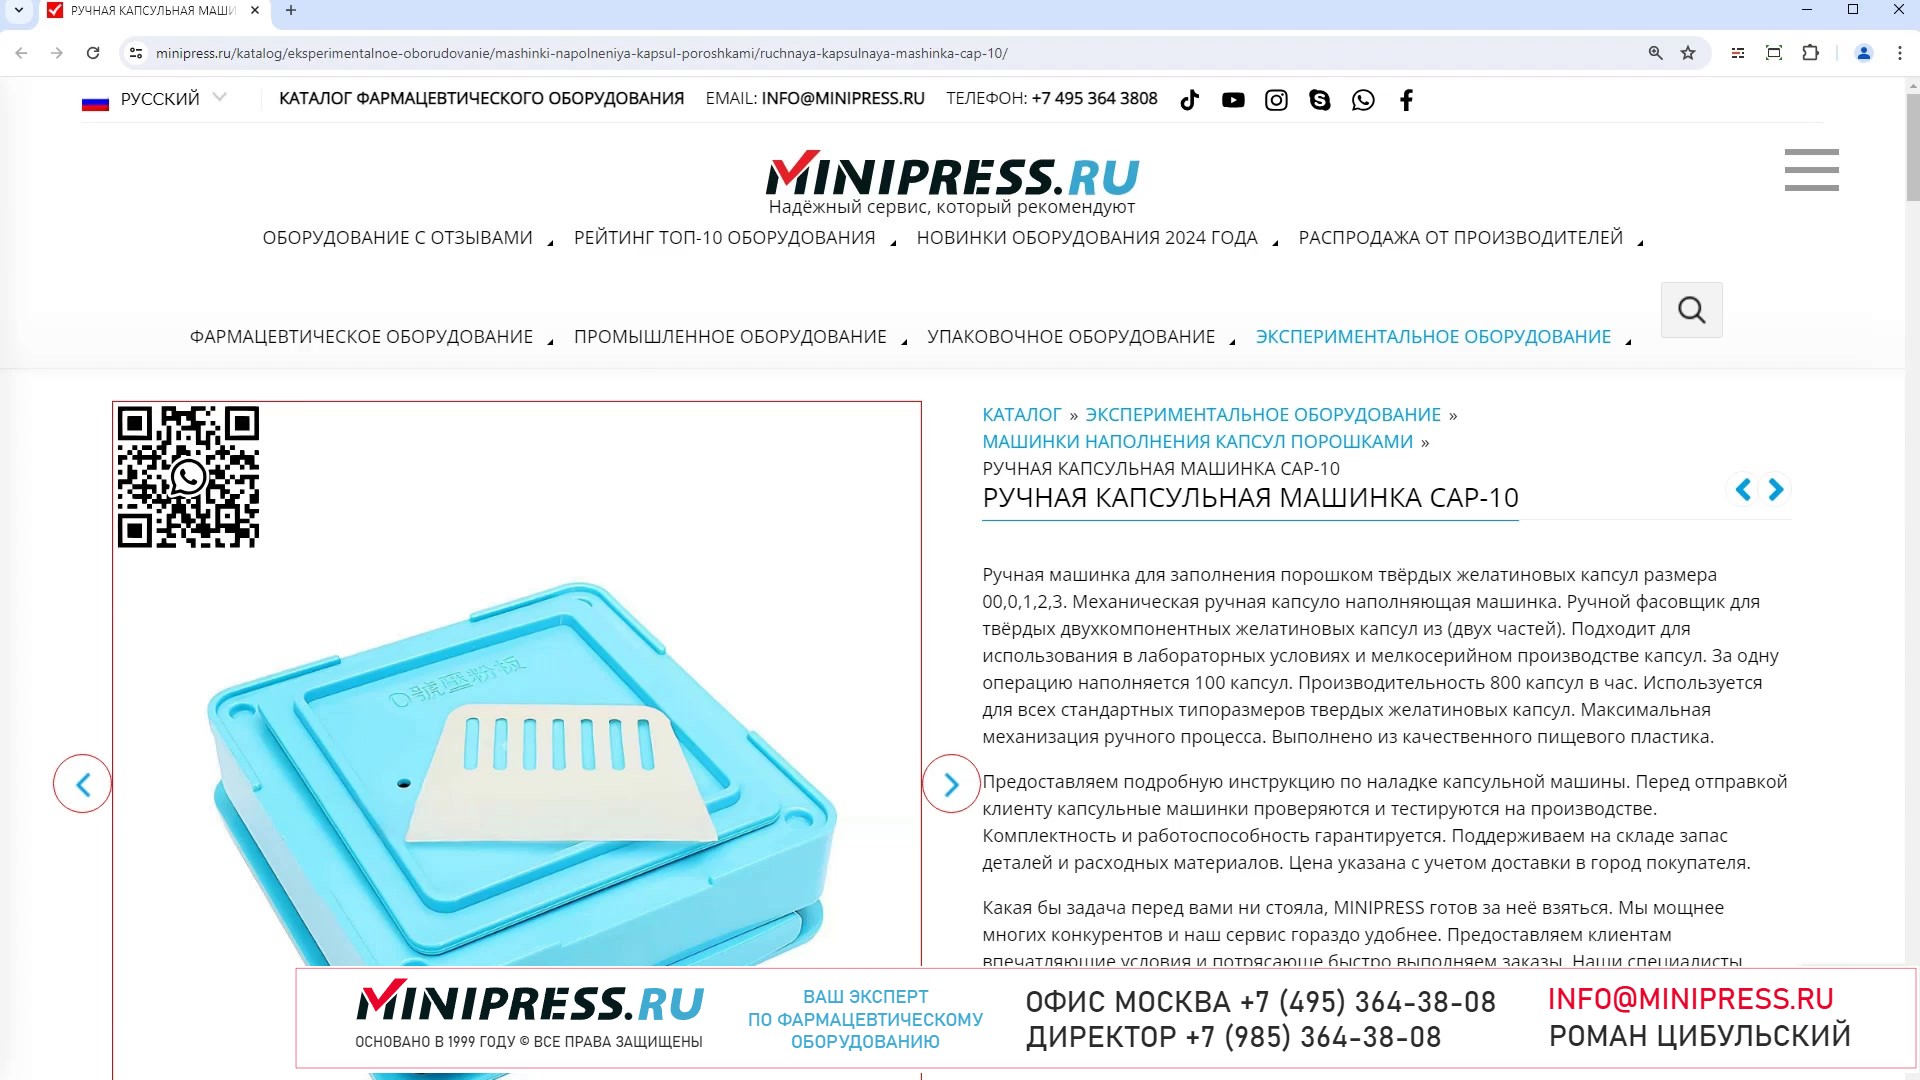 Minipress.ru Ручная капсульная машинка CAP-10